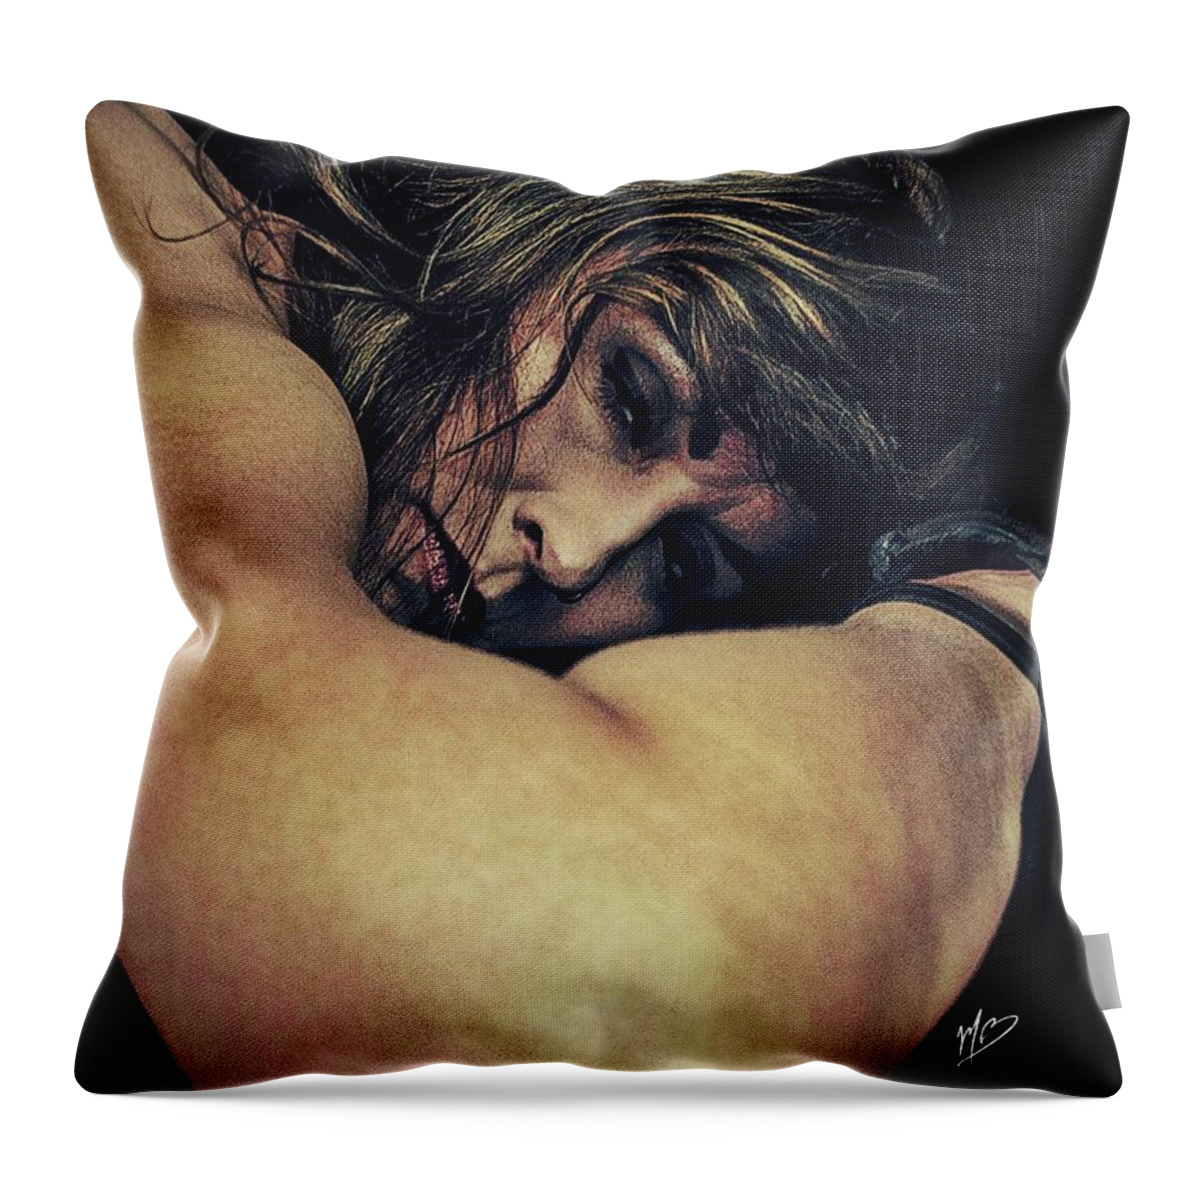 Fenale Throw Pillow featuring the digital art Jenn 6 by Mark Baranowski